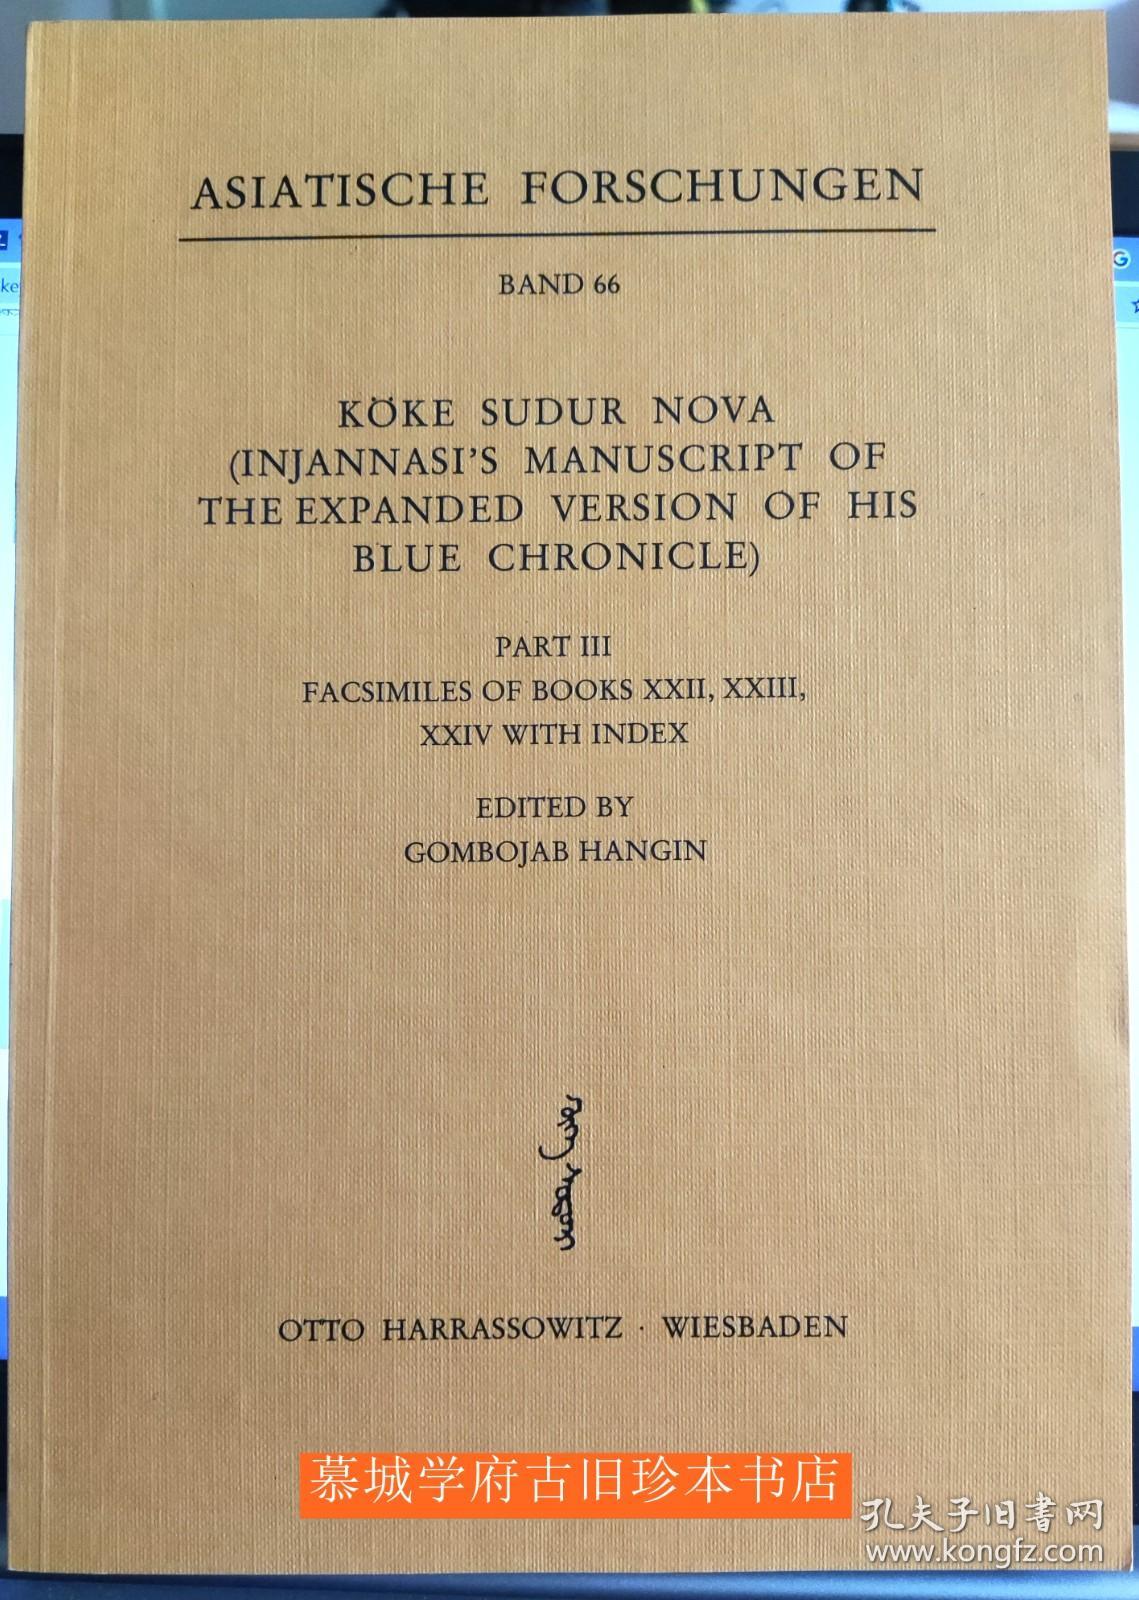 Köke sudur nova: (Injannasi's manuscript of the expanded version of his Blue chronicle) part III Facsimiles of books XXII, XXIII, XXIV with index